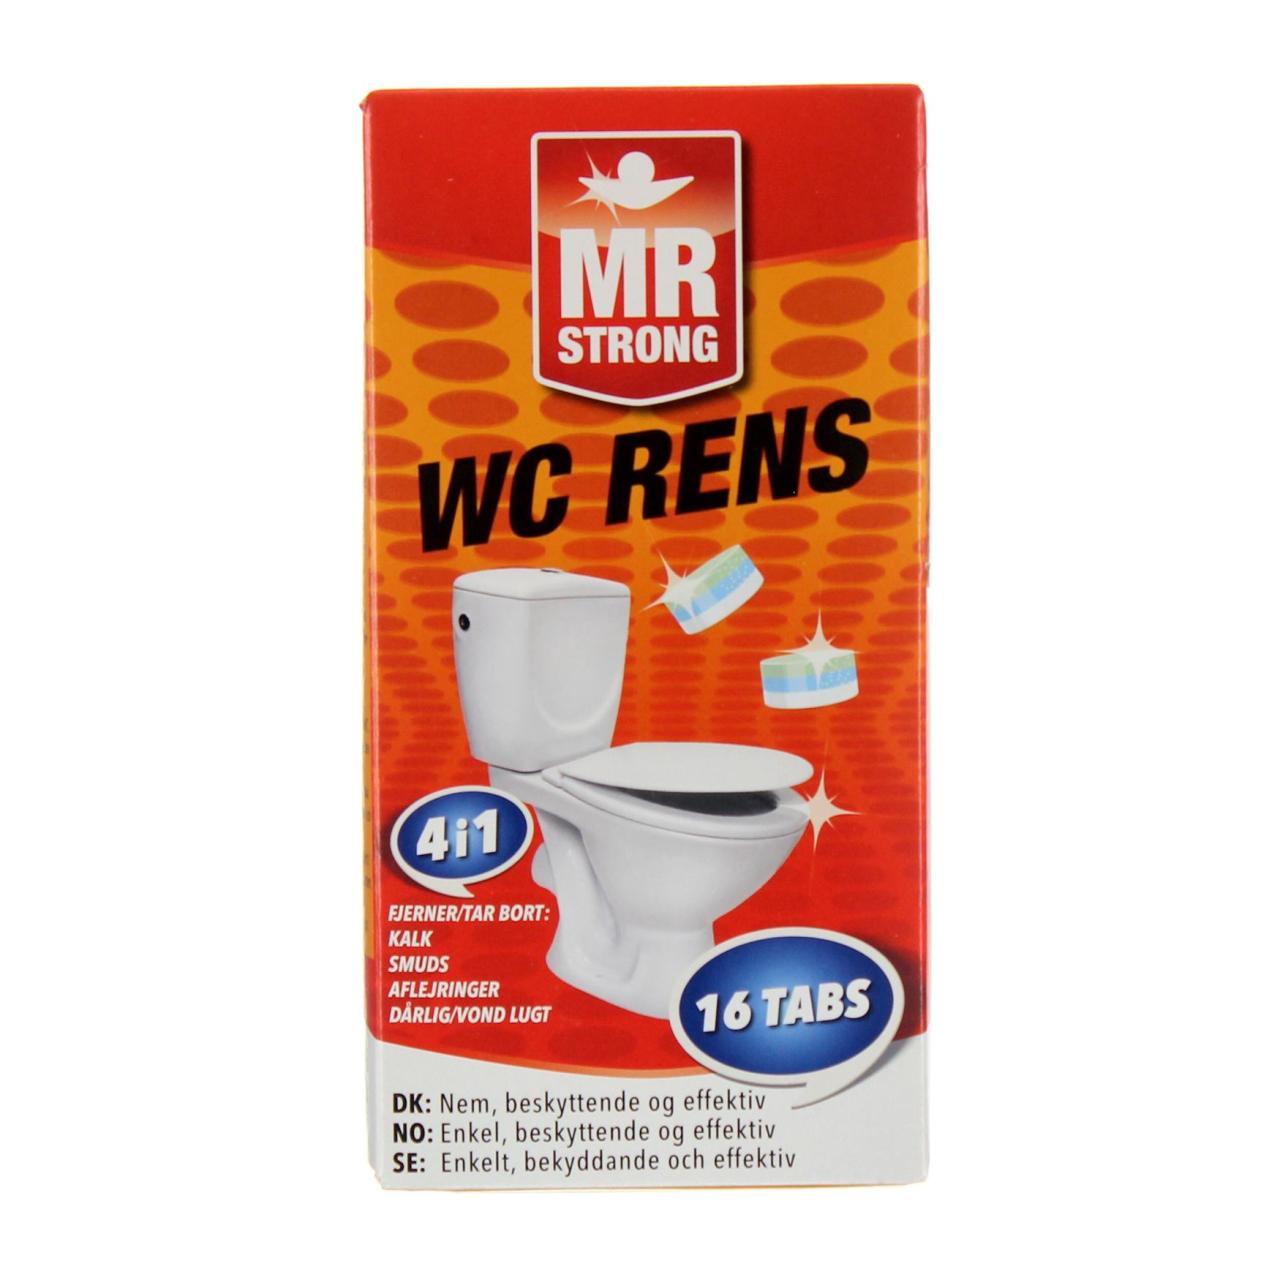 MR Strong WC rens/Toilettenreiniger 16 tabs